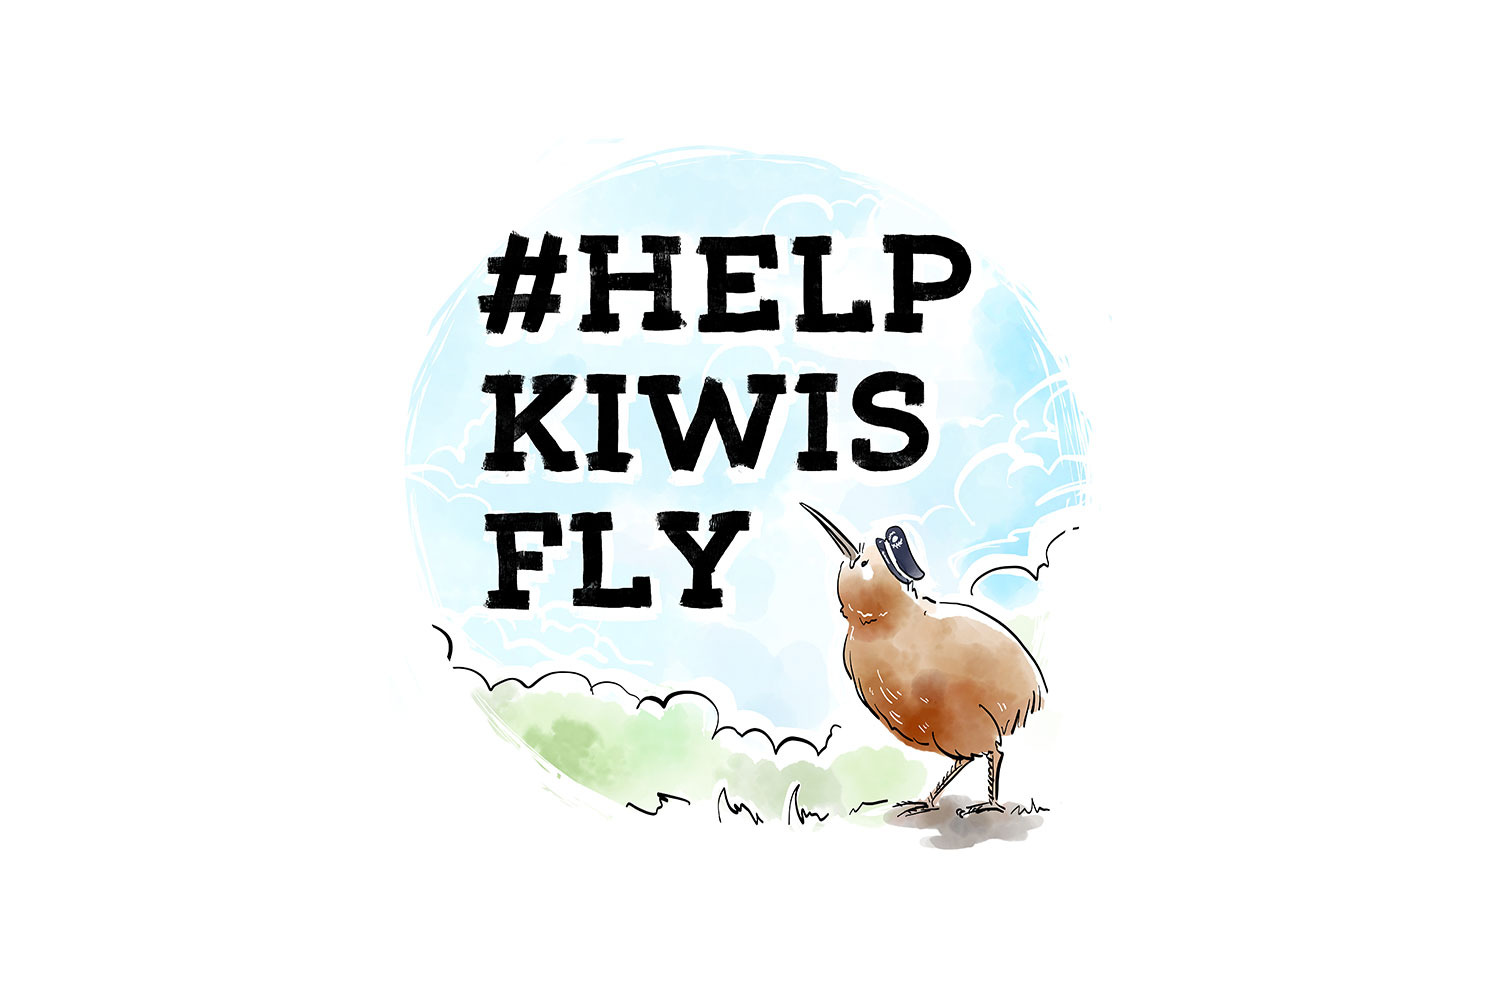 kiwi travel agent